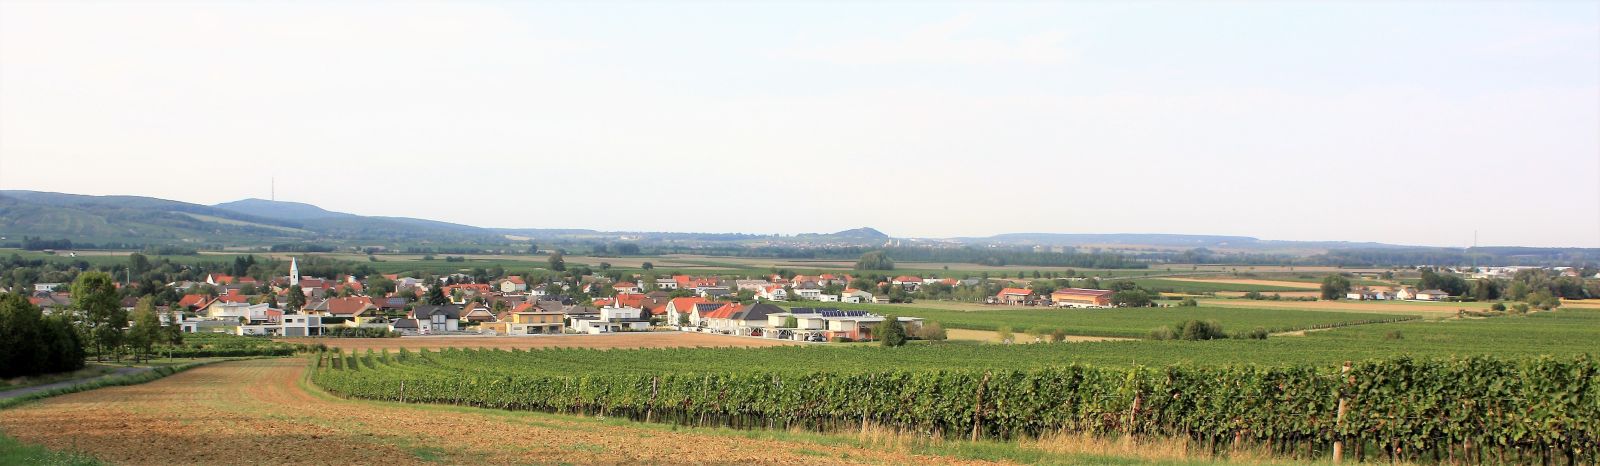 Unterpetersdorf